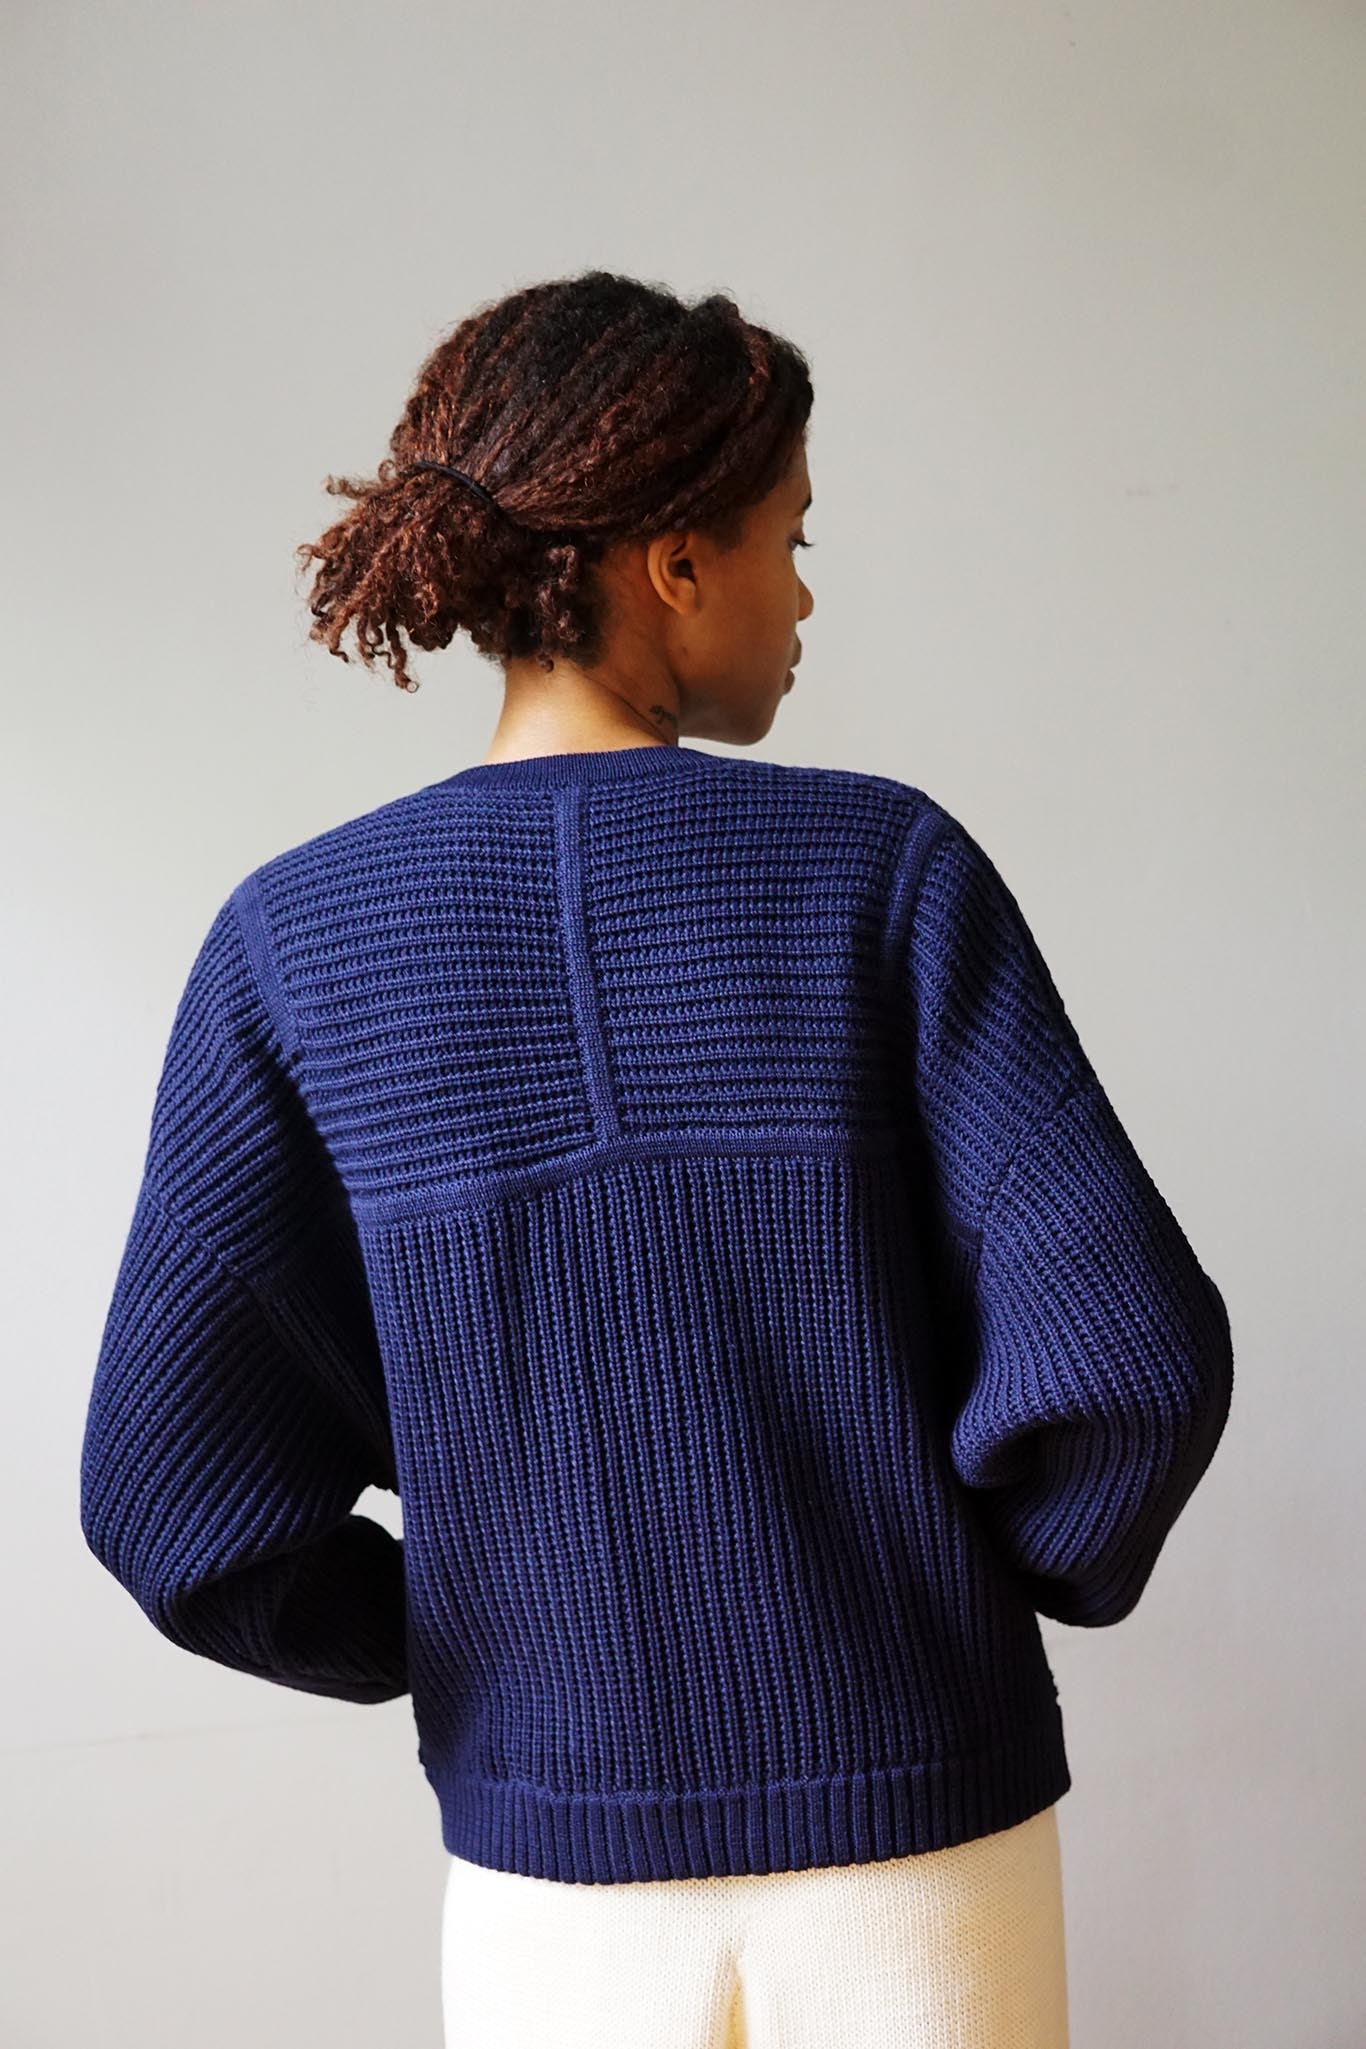 Organic cotton handmade knit sweater cardigan. Made in Peru. Brooklyn Style.